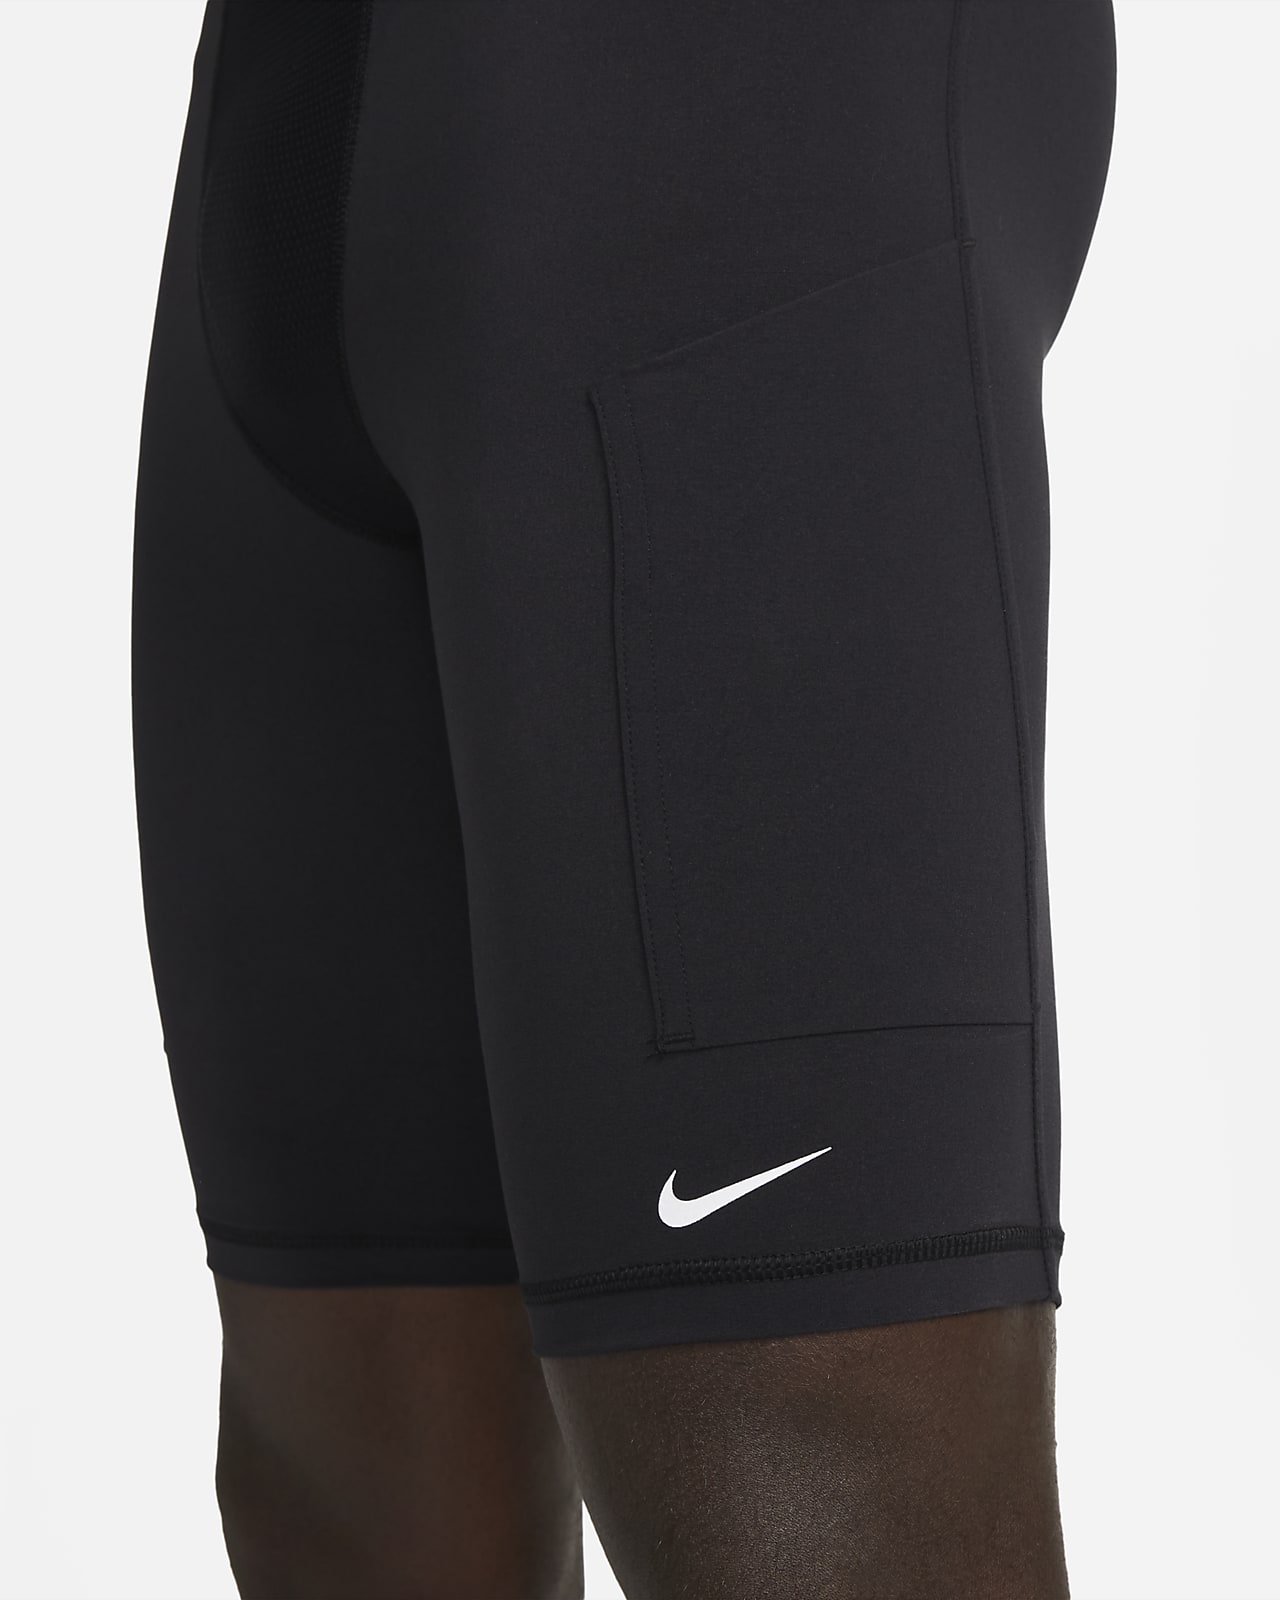 Folleto no relacionado Reacondicionamiento Nike Dri-FIT ADV A.P.S. Men's Fitness Base Layer Shorts. Nike SG